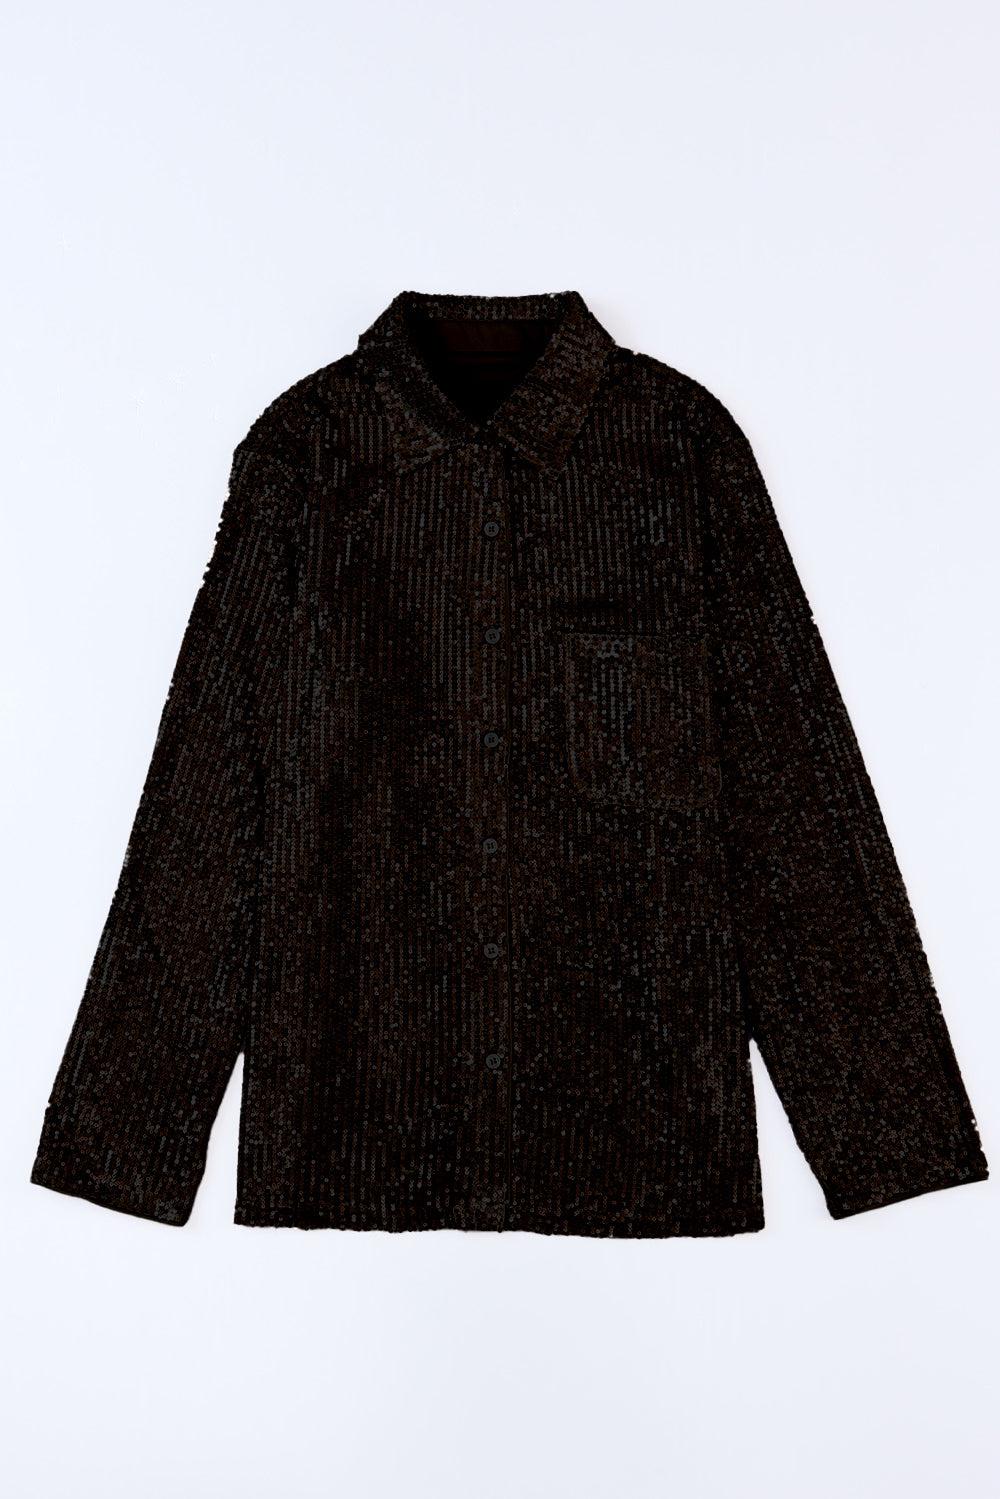 Sequin Button Up Long Sleeve Shirt - Black